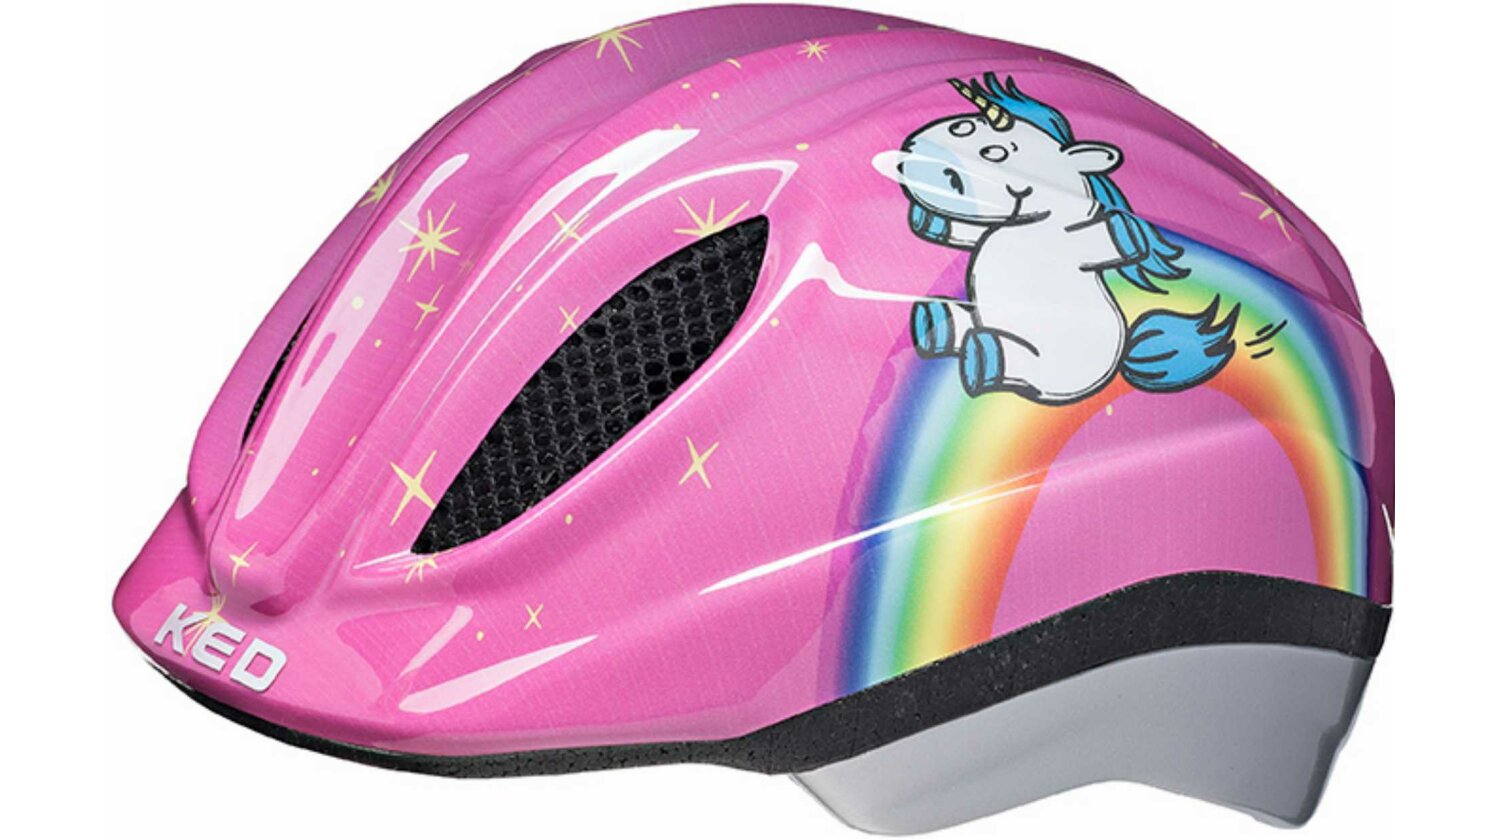 KED Meggy II Originals Unicorn Helm